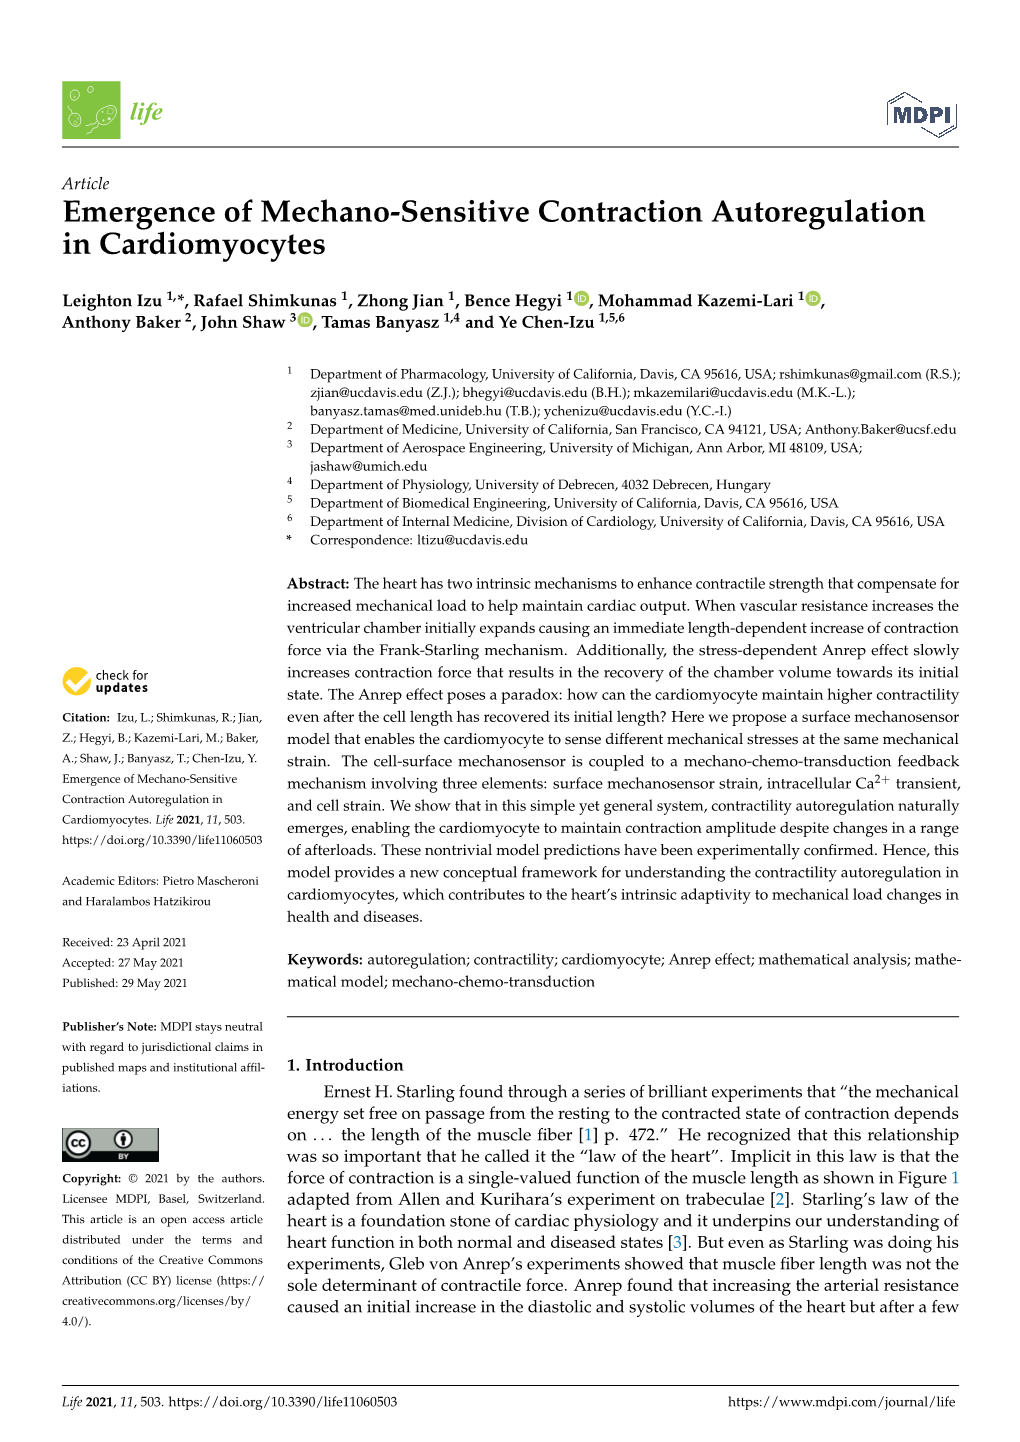 Emergence of Mechano-Sensitive Contraction Autoregulation in Cardiomyocytes